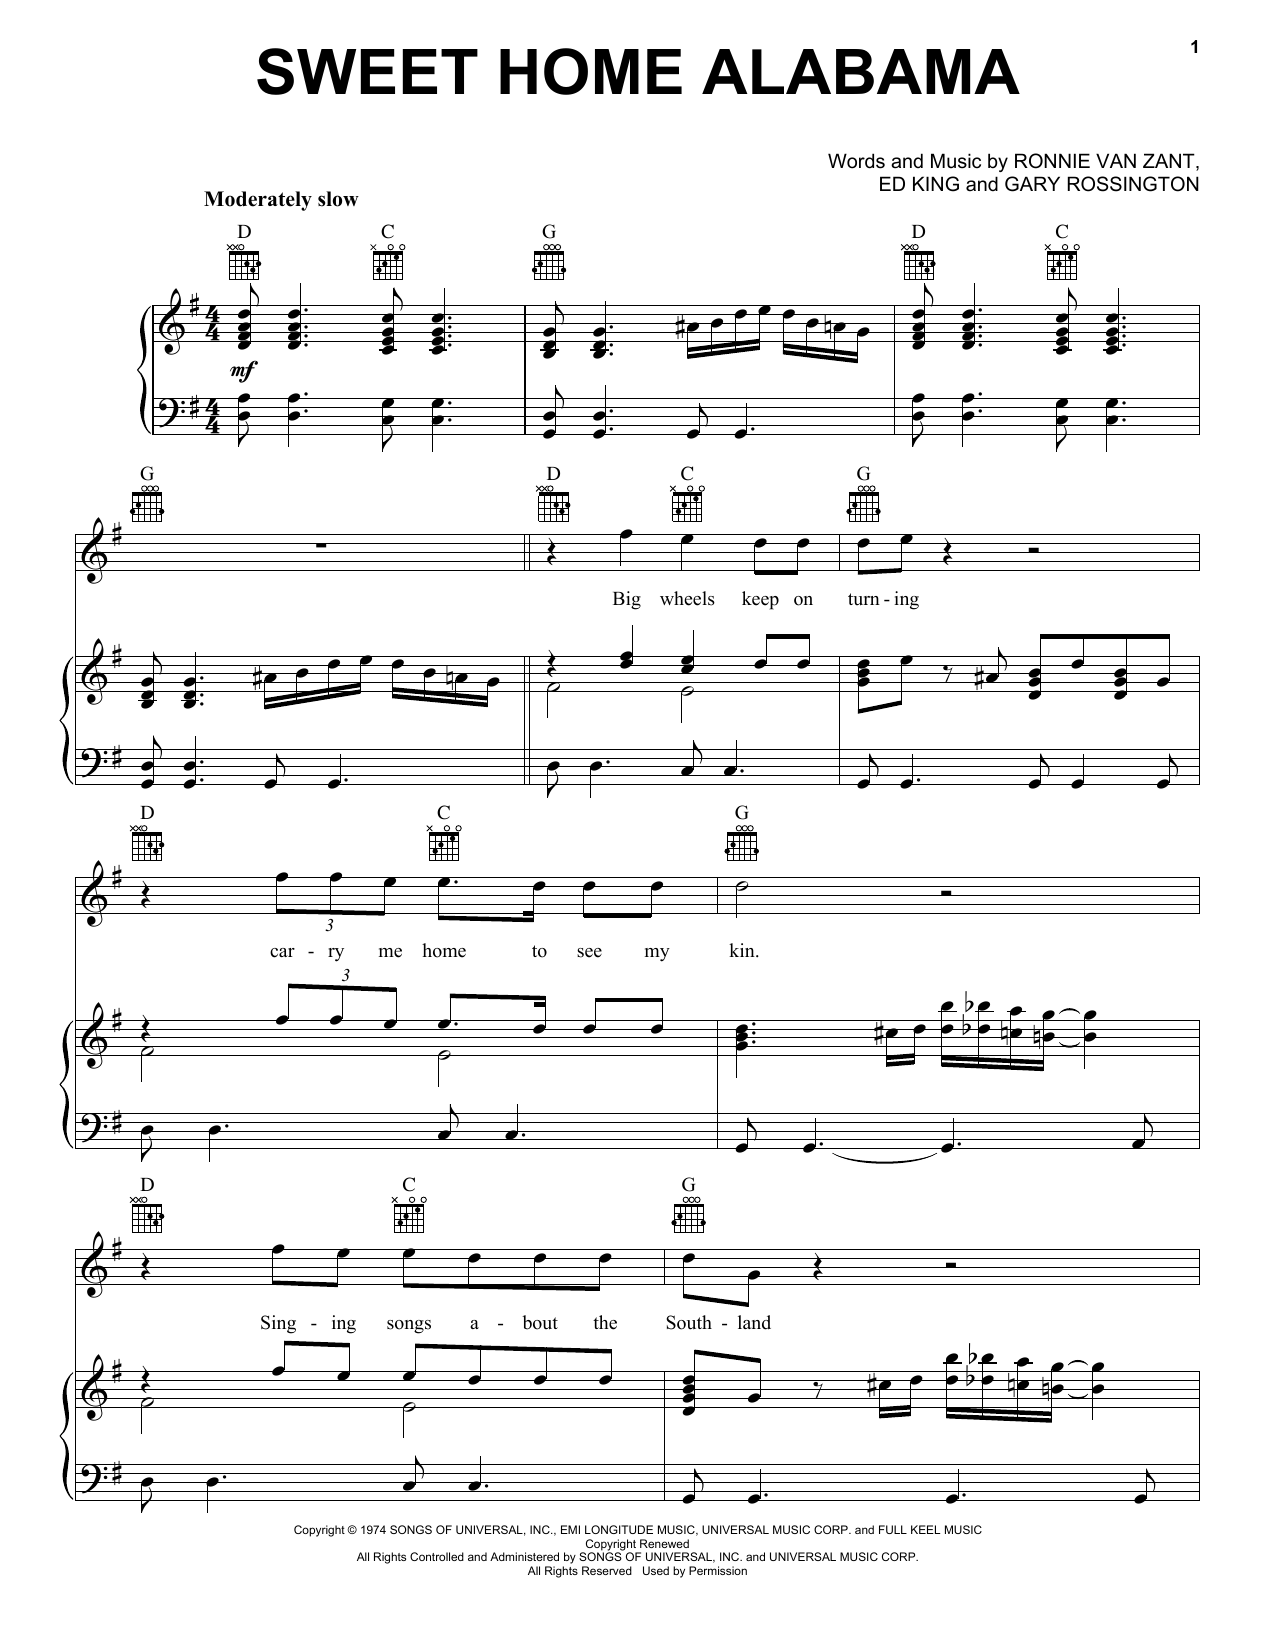 Lynyrd Skynyrd Sweet Home Alabama Sheet Music Notes & Chords for Easy Guitar Tab - Download or Print PDF